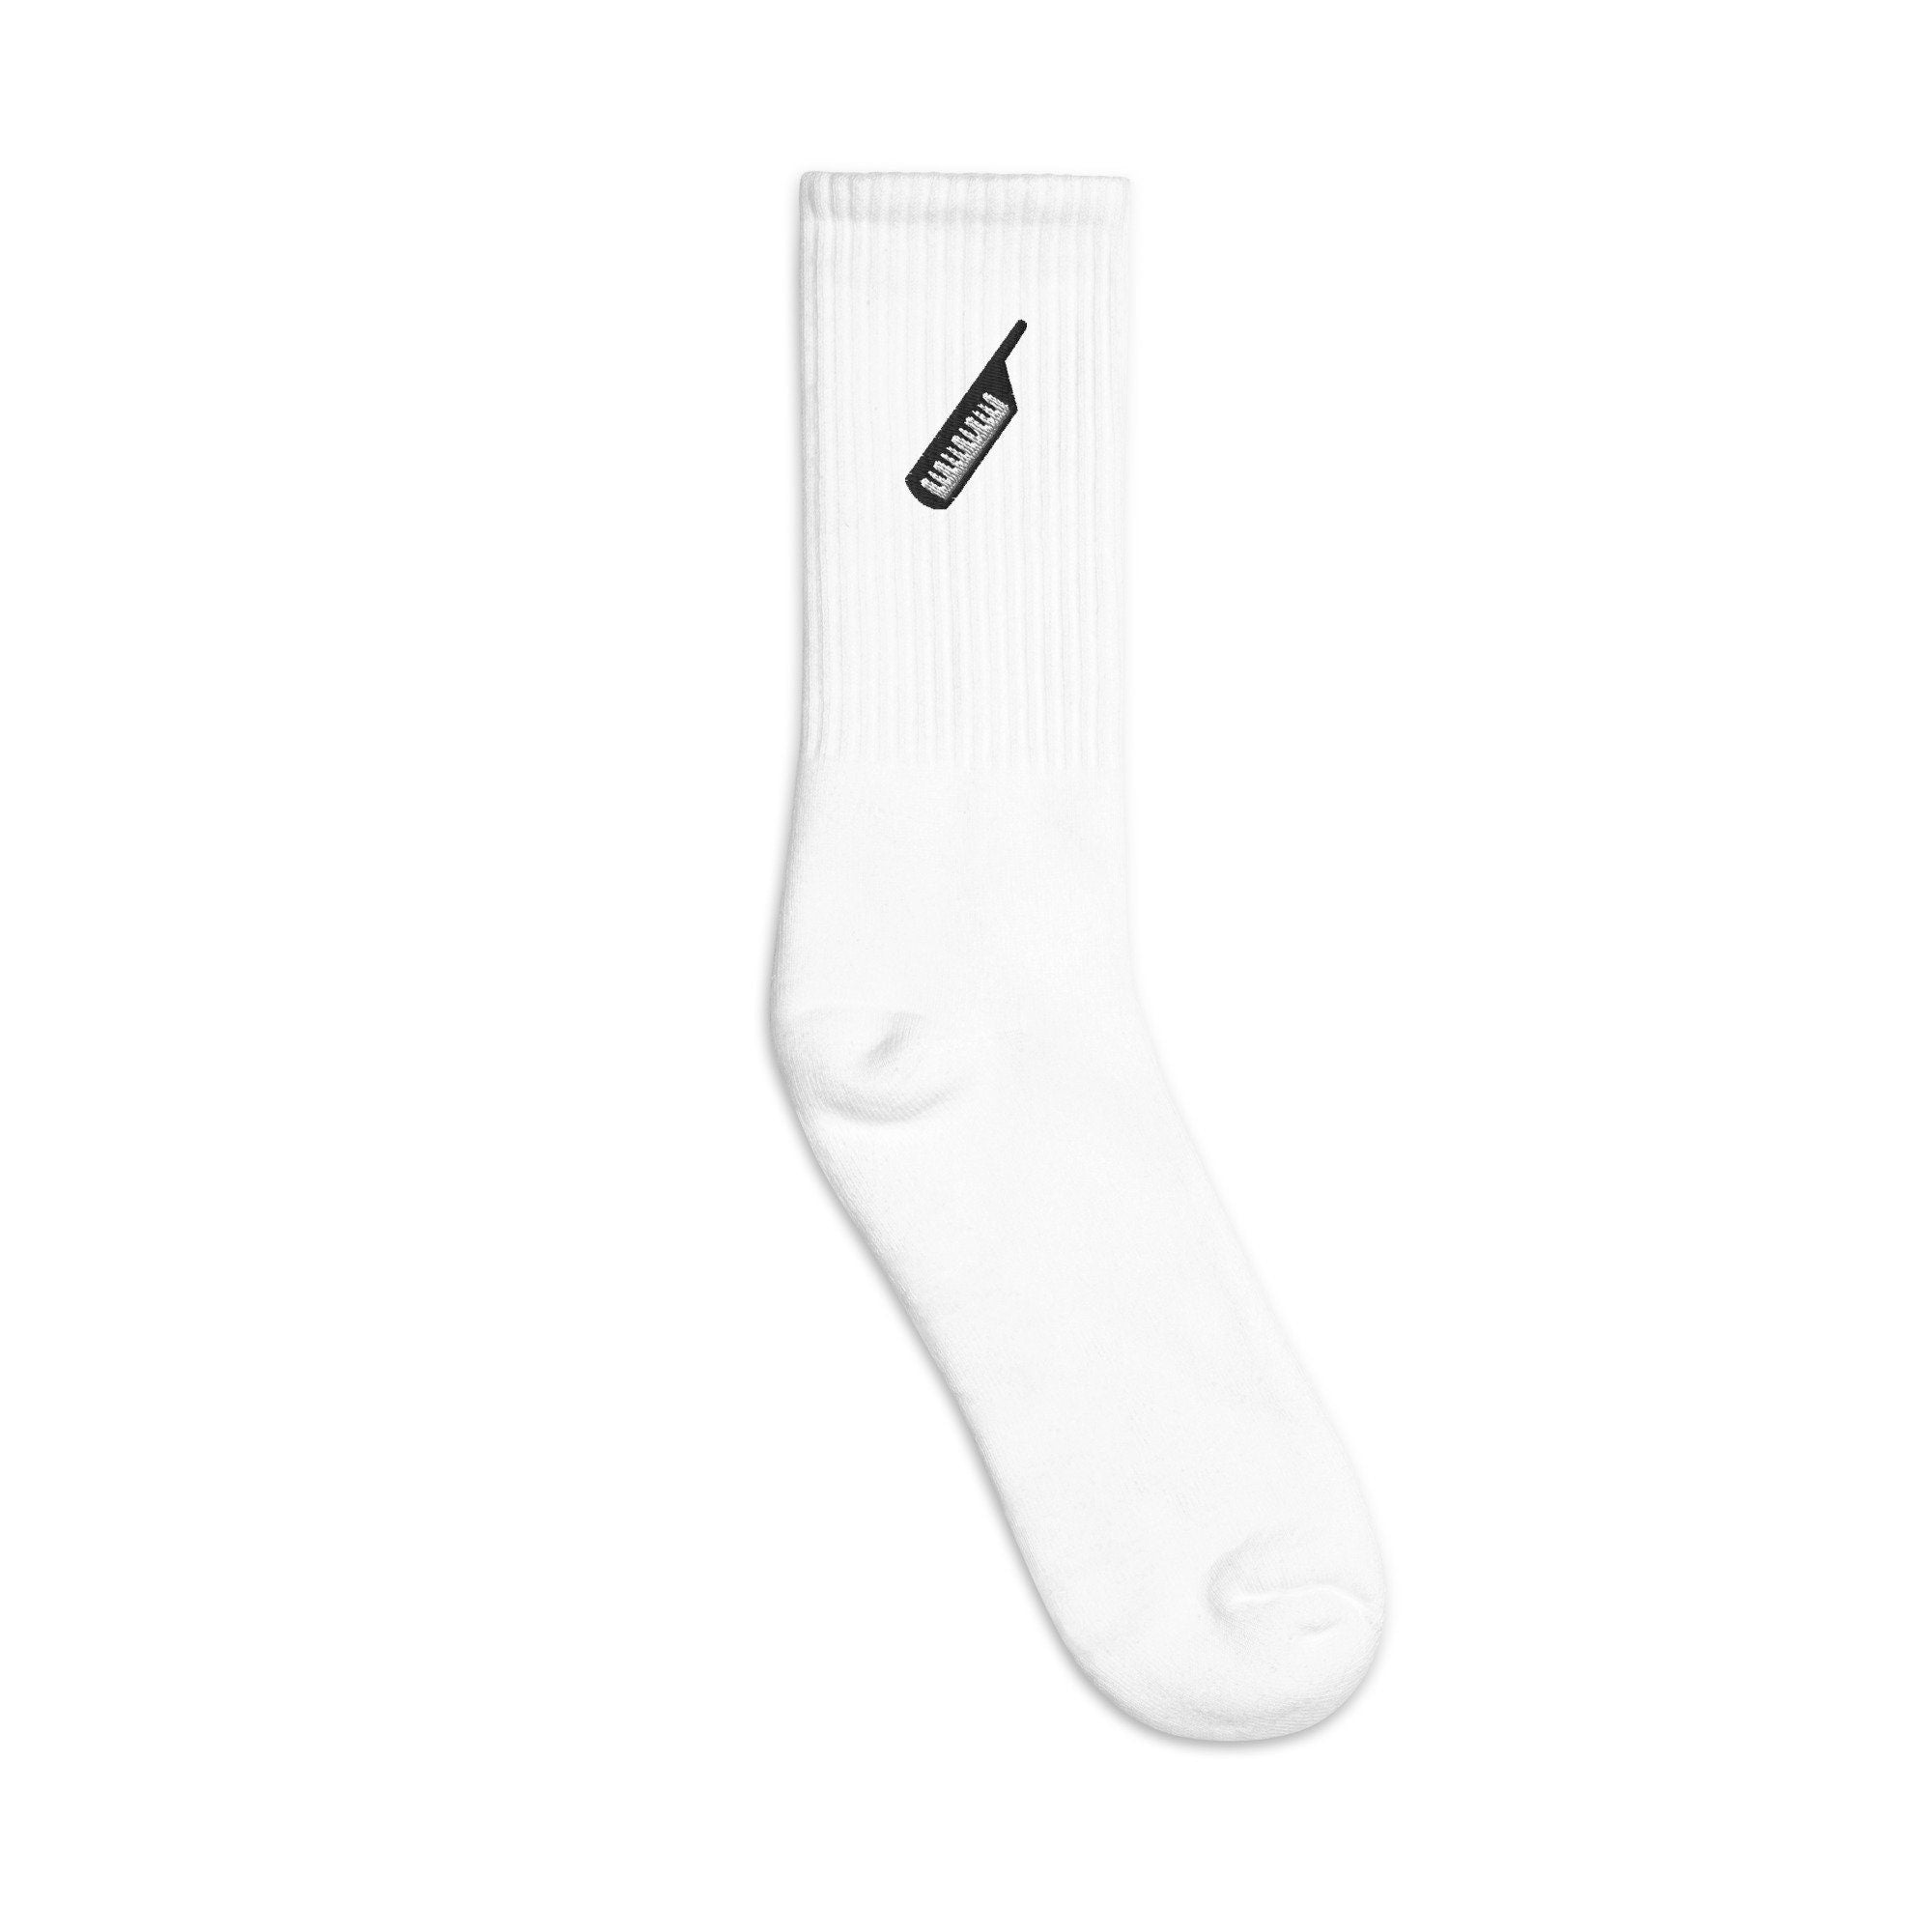 Keytar Embroidered Socks, Premium Embroidered Socks, Long Socks Gift - Multiple Colors